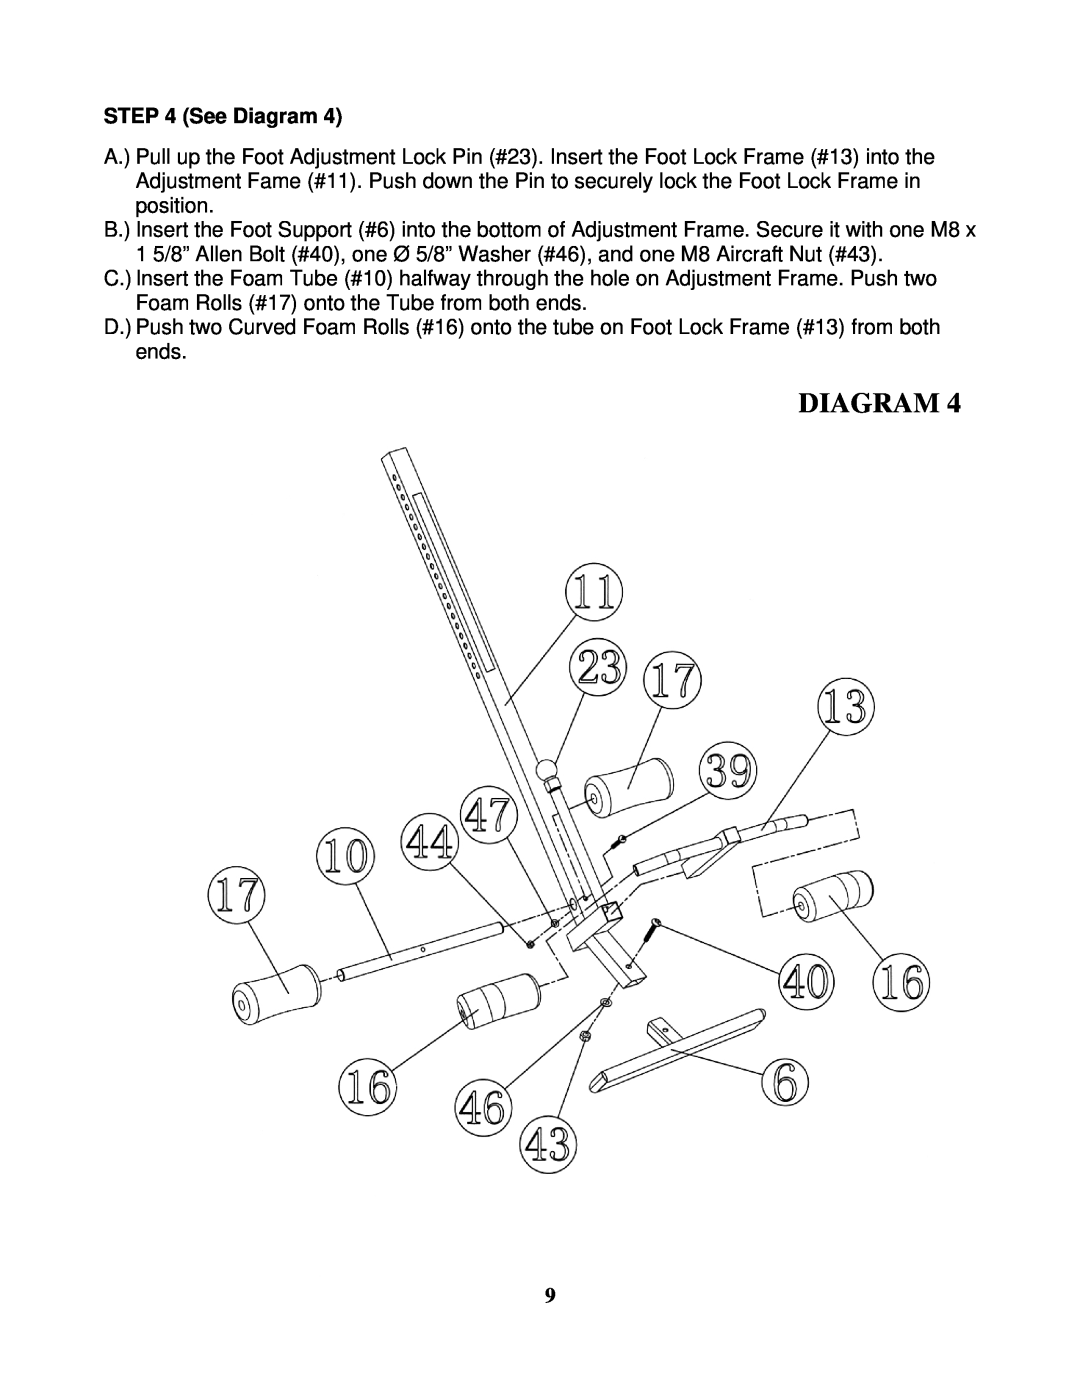 Impex IVT-451 manual See Diagram 